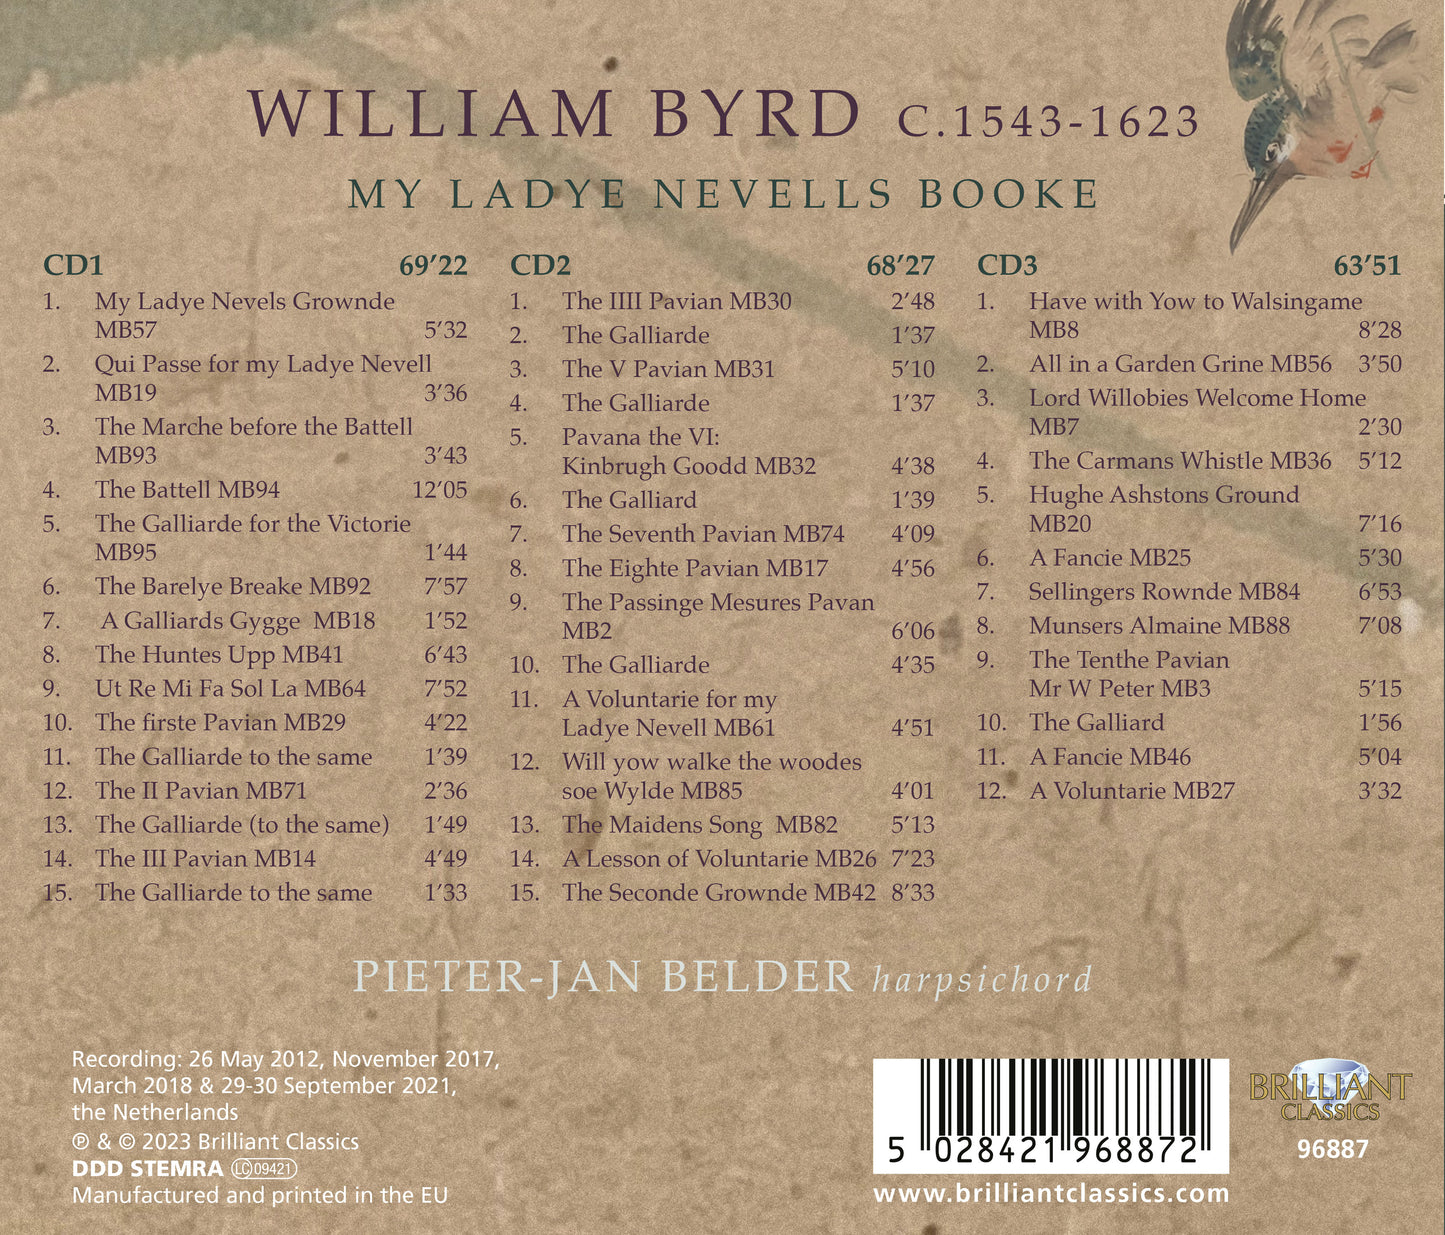 Byrd: My Ladye Nevells Booke